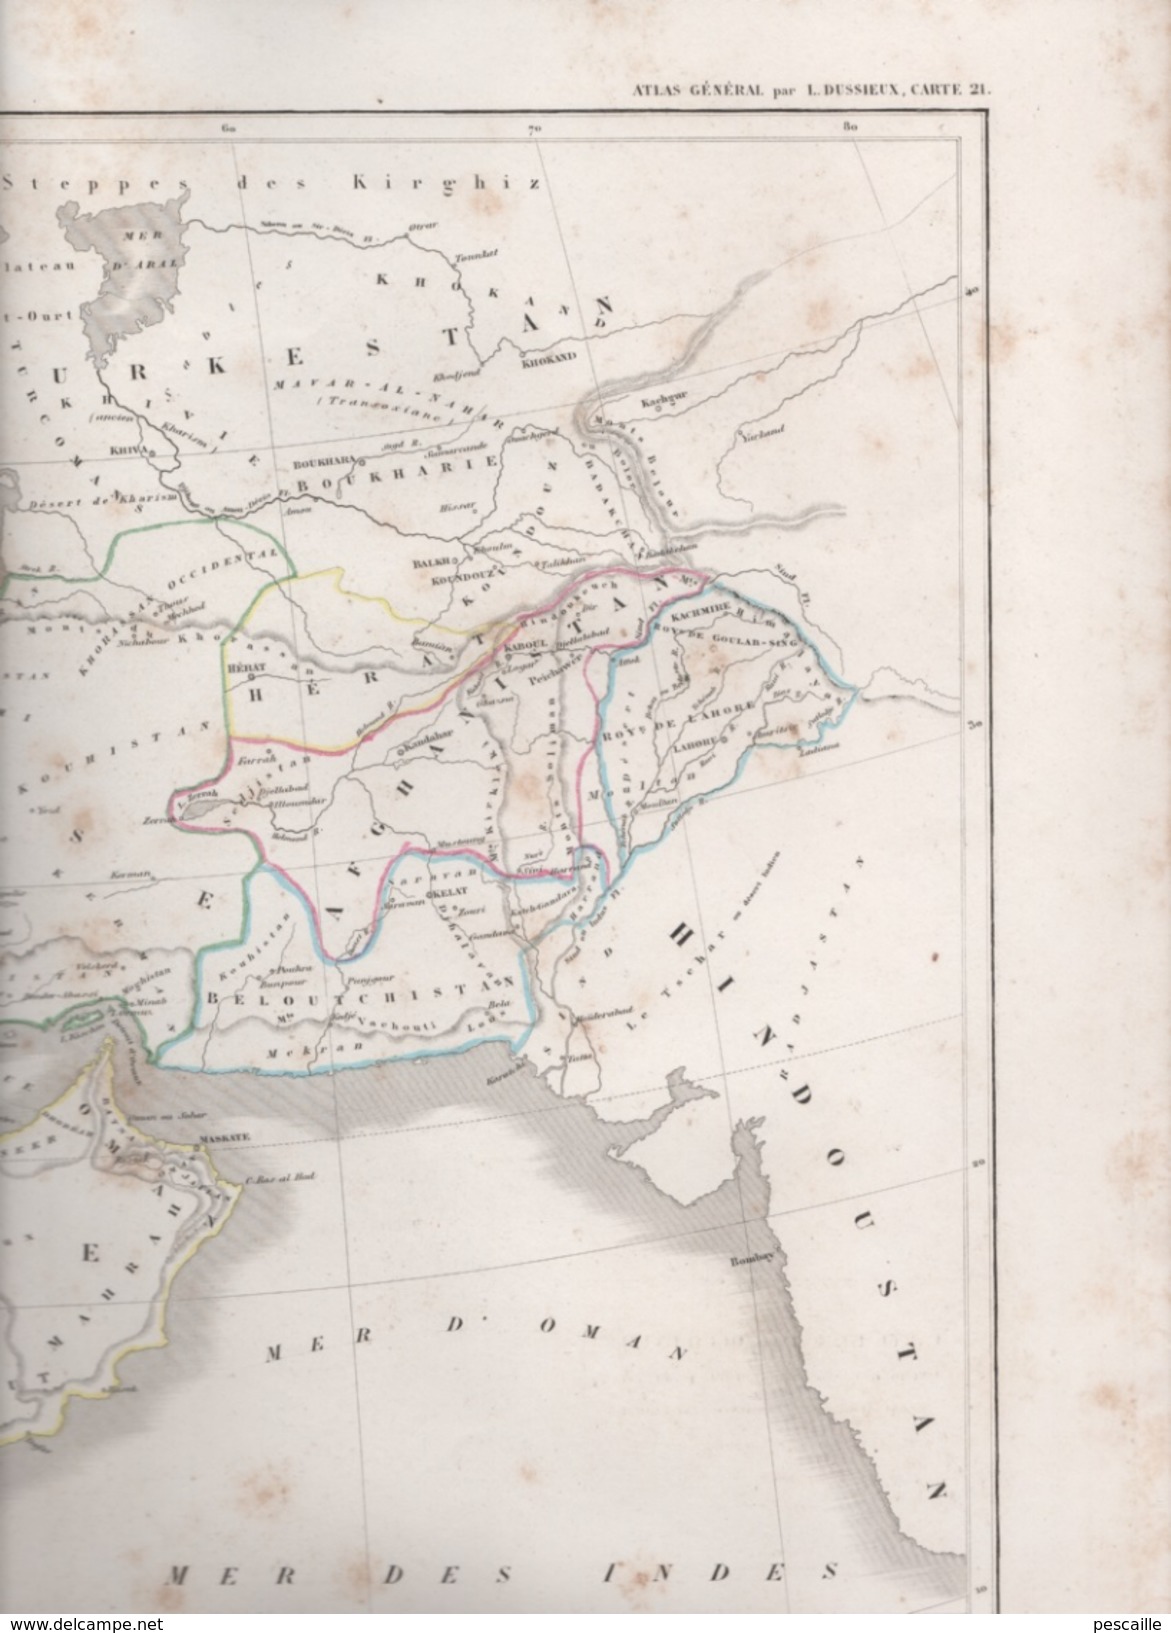 CARTE DE L'ASIE OCCIDENTALE DRESSEE PAR L DUSSIEUX EN 1847 - TURQUIE D'ASIE PERSE ARABIE TURKESTAN HERAT AFGHANISTAN - Geographical Maps